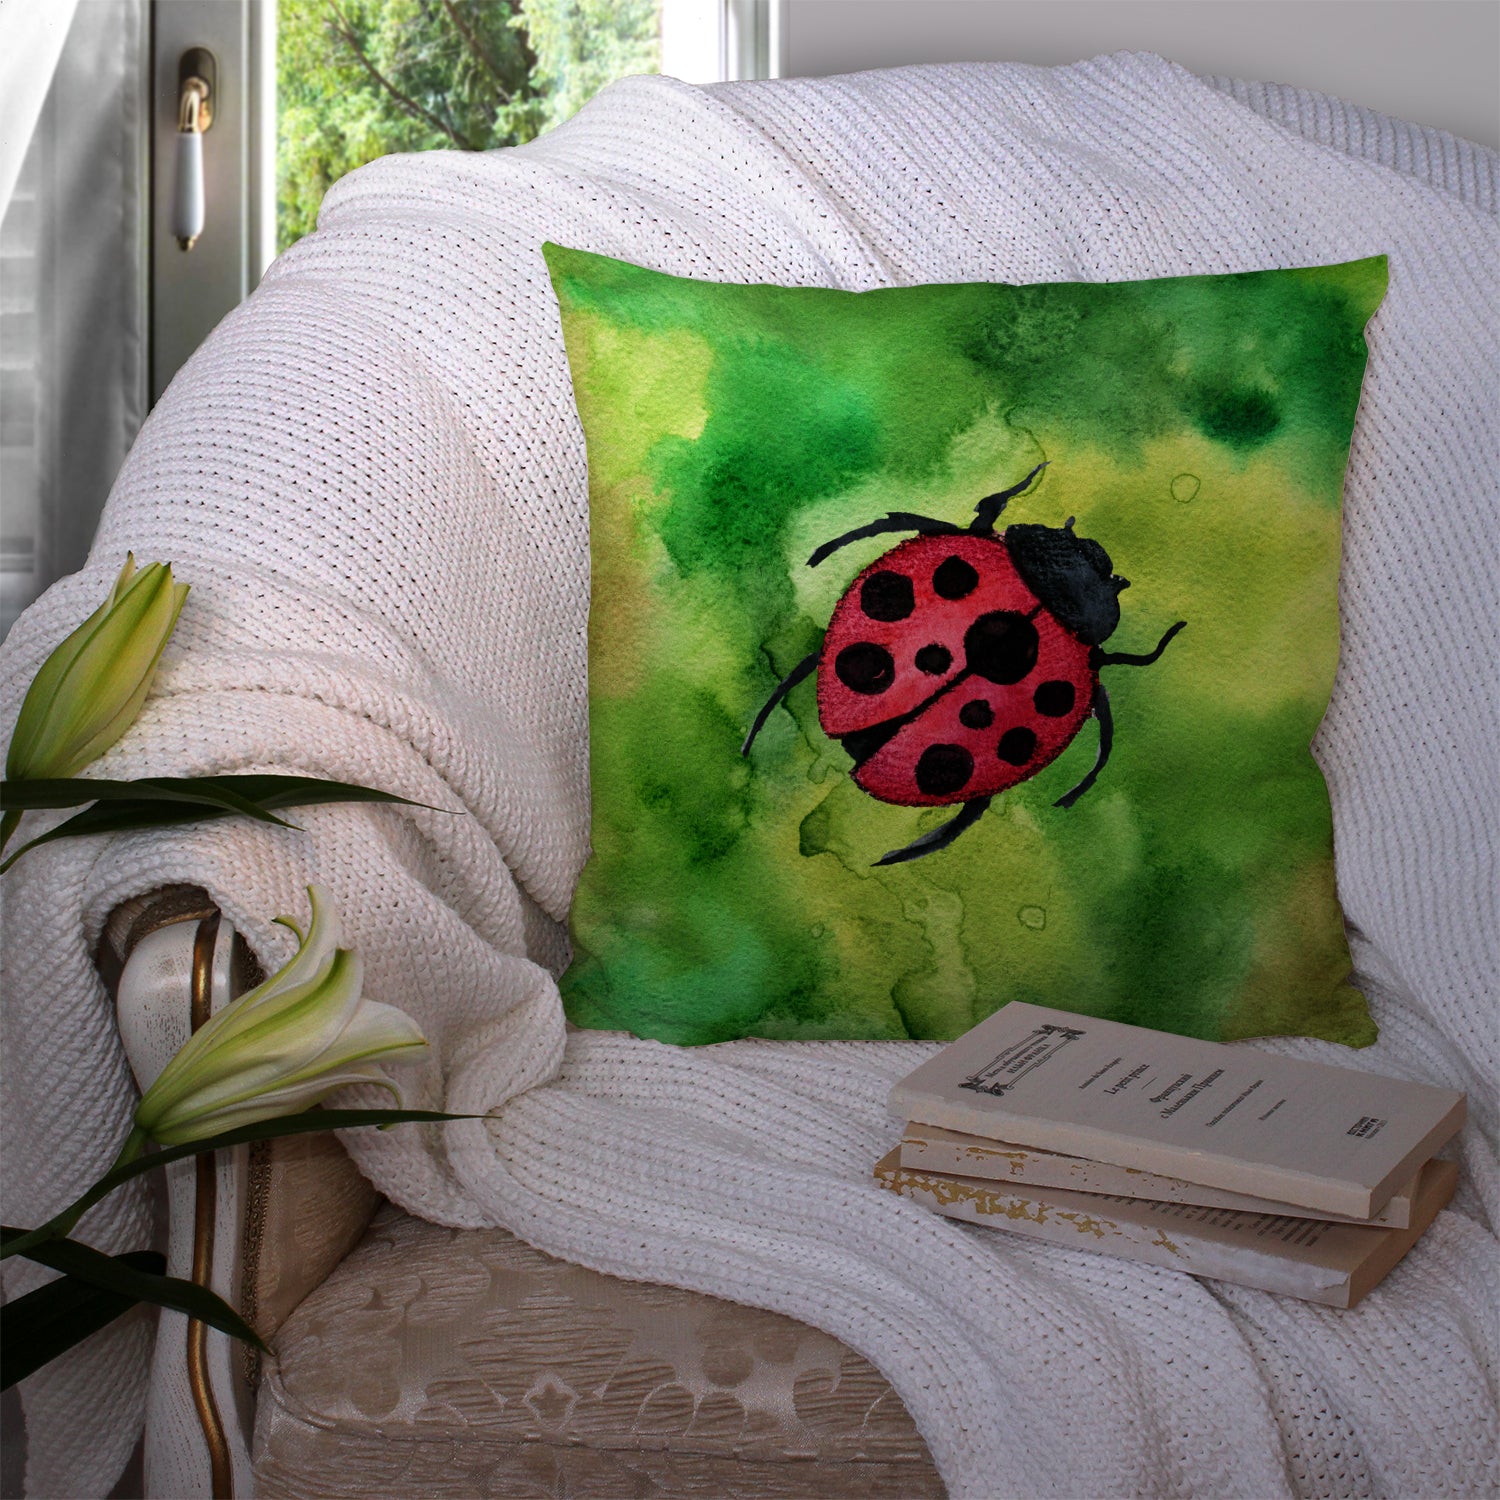 Irish Lady Bug Fabric Decorative Pillow BB5770PW1414 - the-store.com